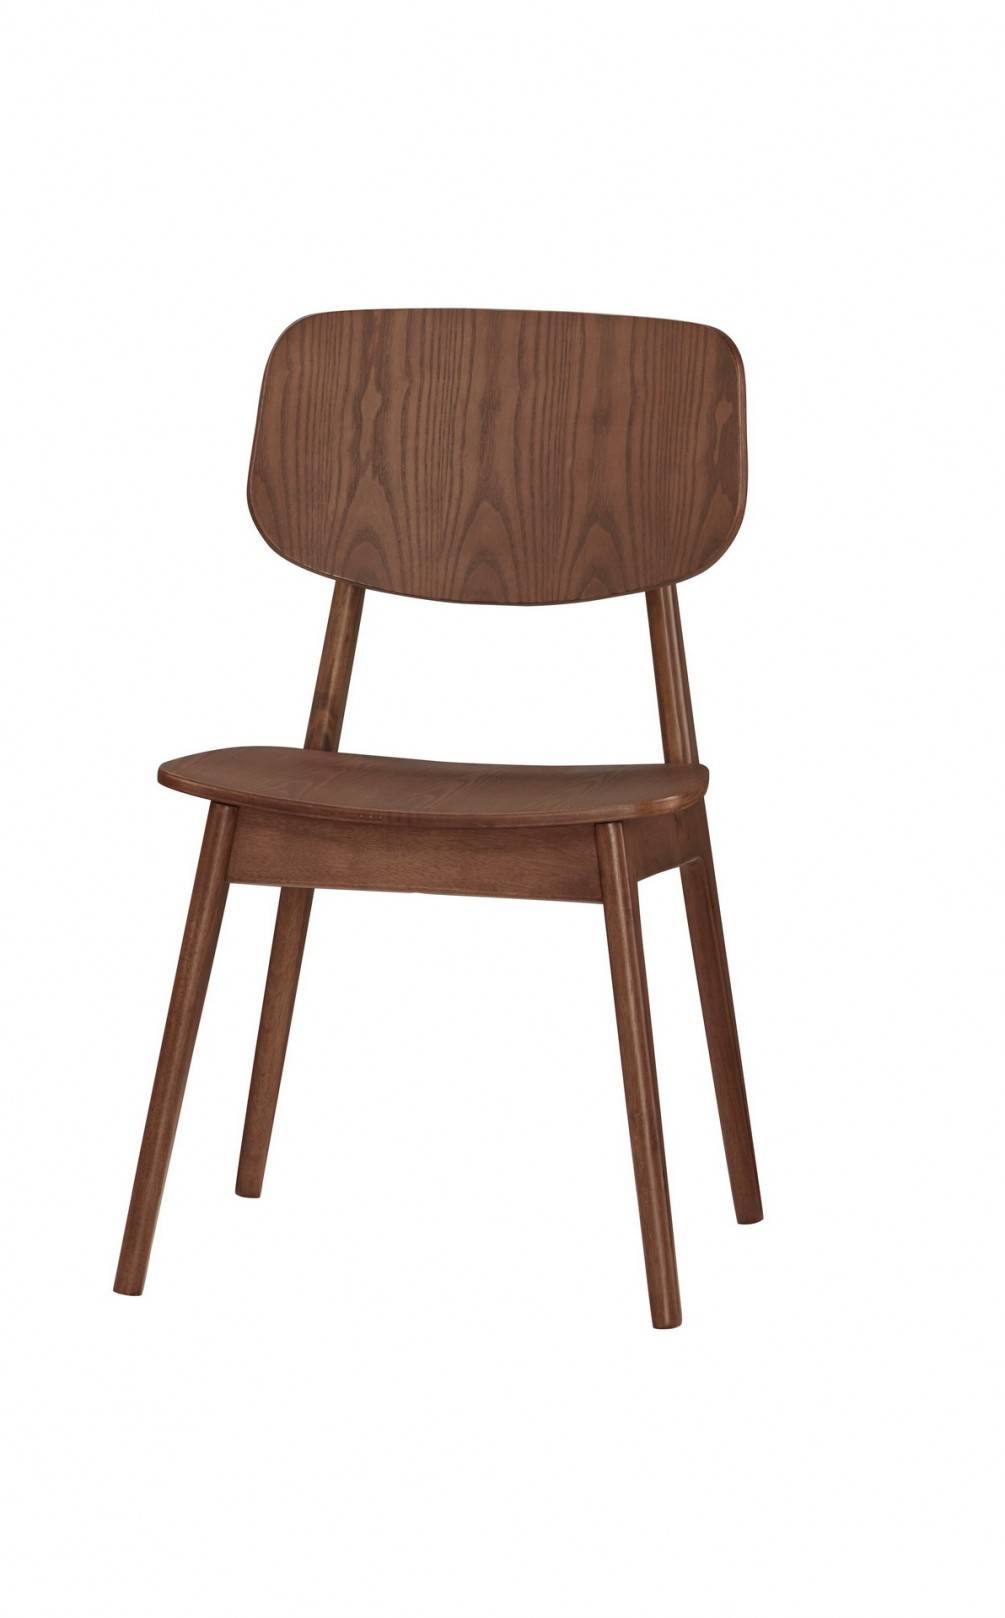 QM-1070-2 卡爾馬餐椅(板)(實木) (不含其他產品)<br /> 尺寸:寬48*深54*高82cm